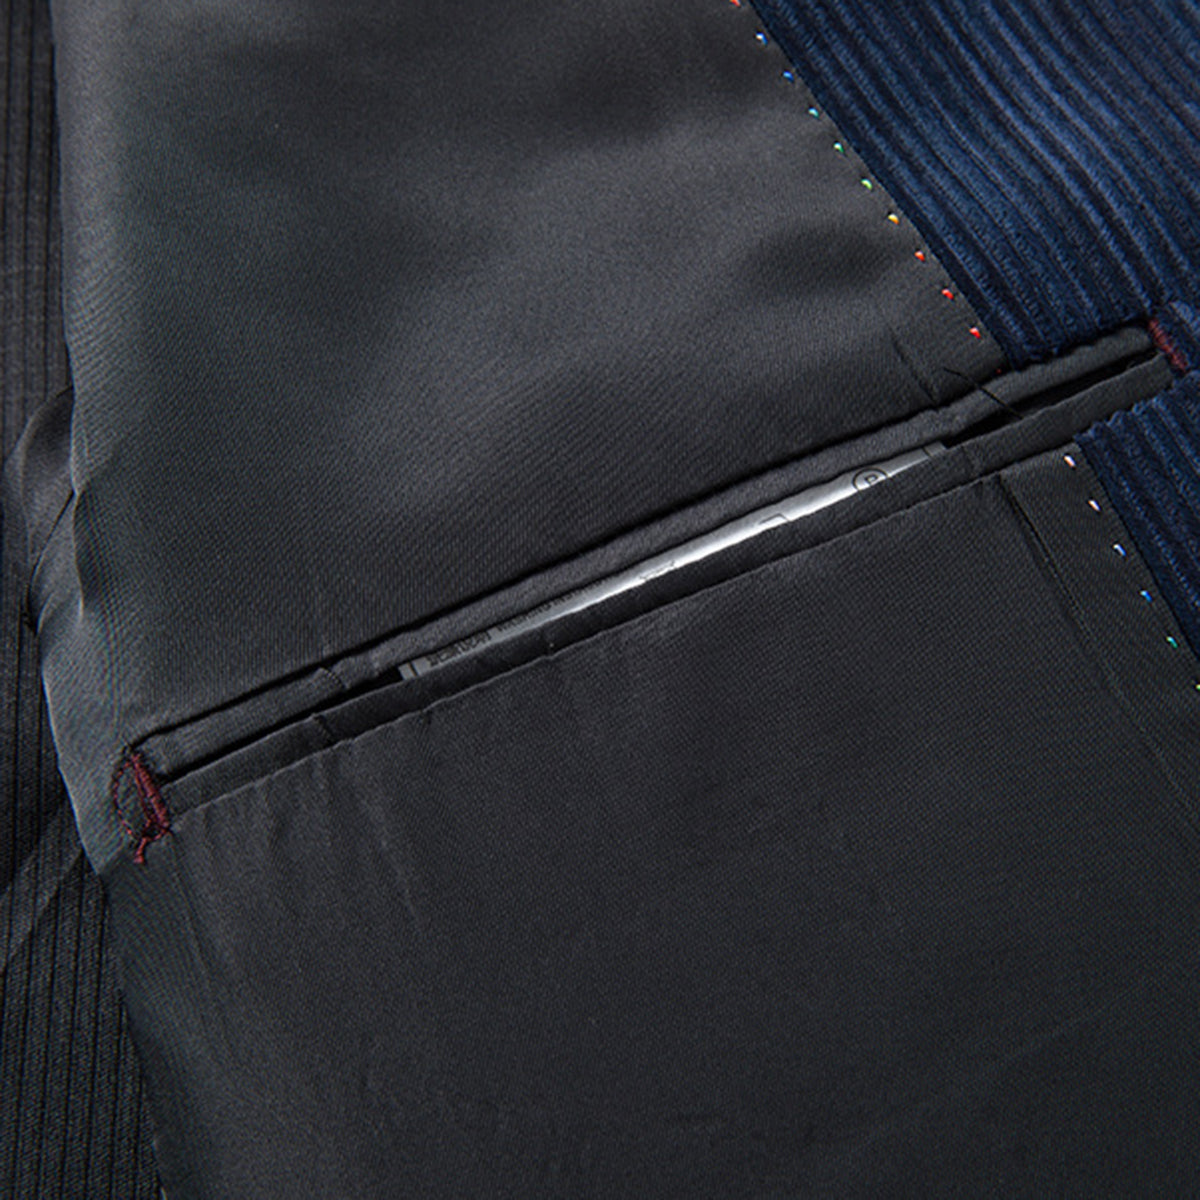 Men's Solid Color Corduroy Two Button Blazer Dark Blue